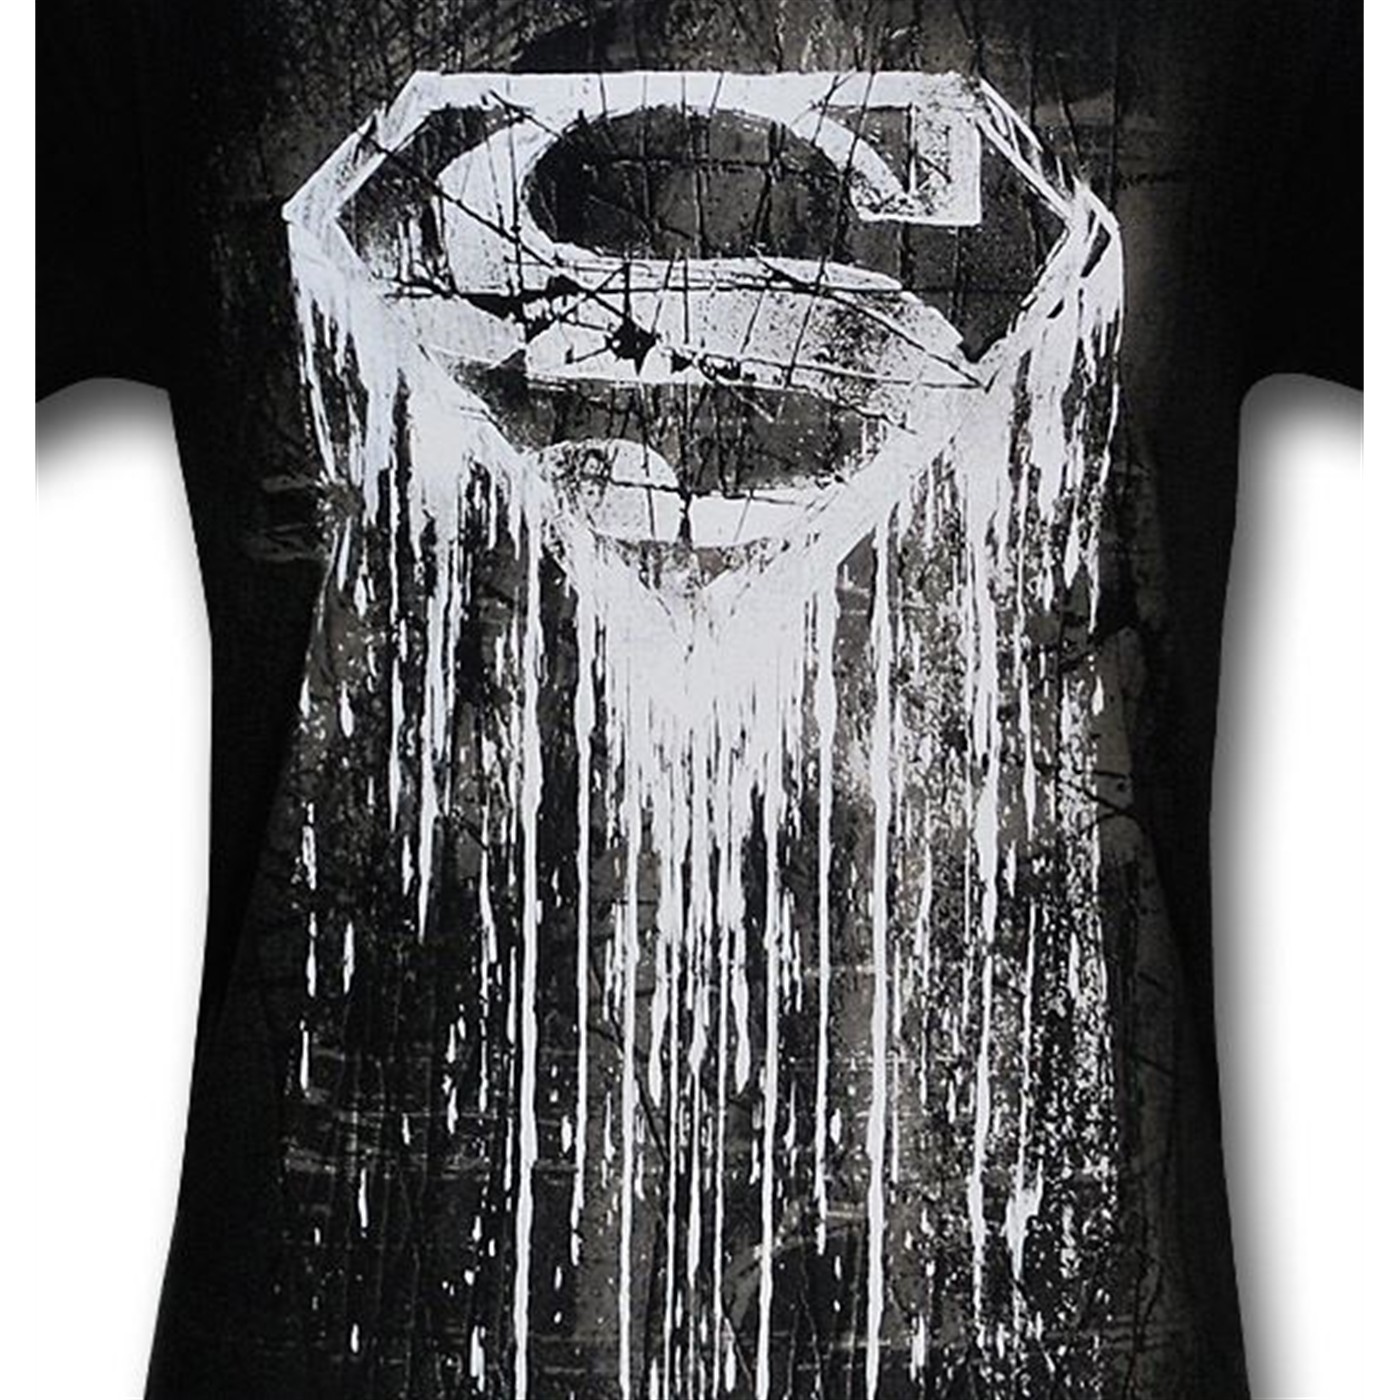 Superman Dark Symbol Streaking T-Shirt